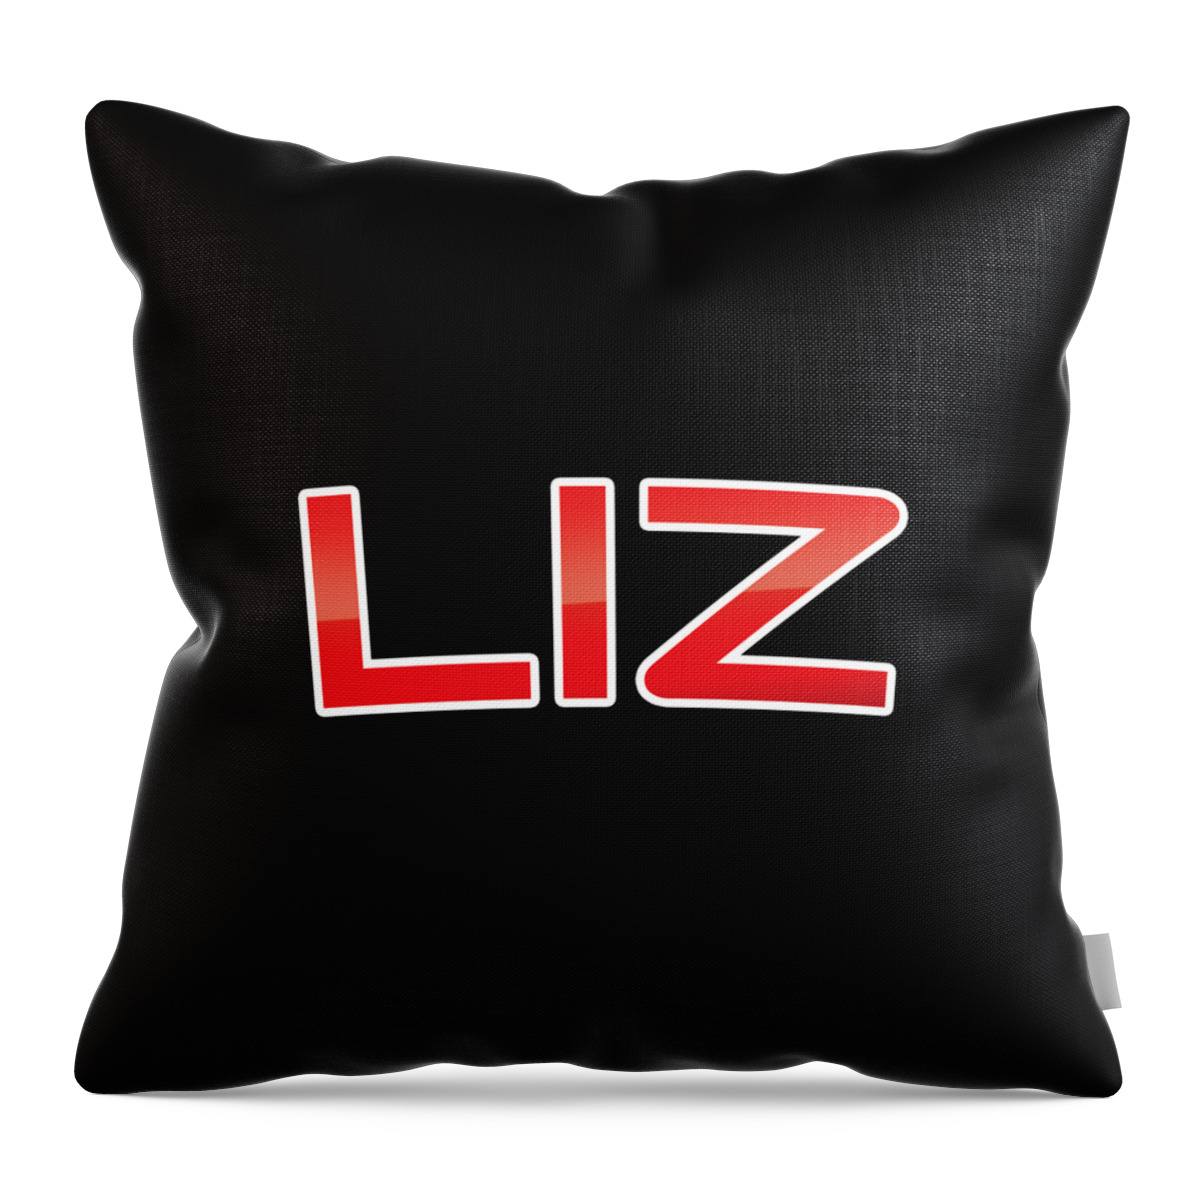 Liz Throw Pillow featuring the digital art Liz by TintoDesigns